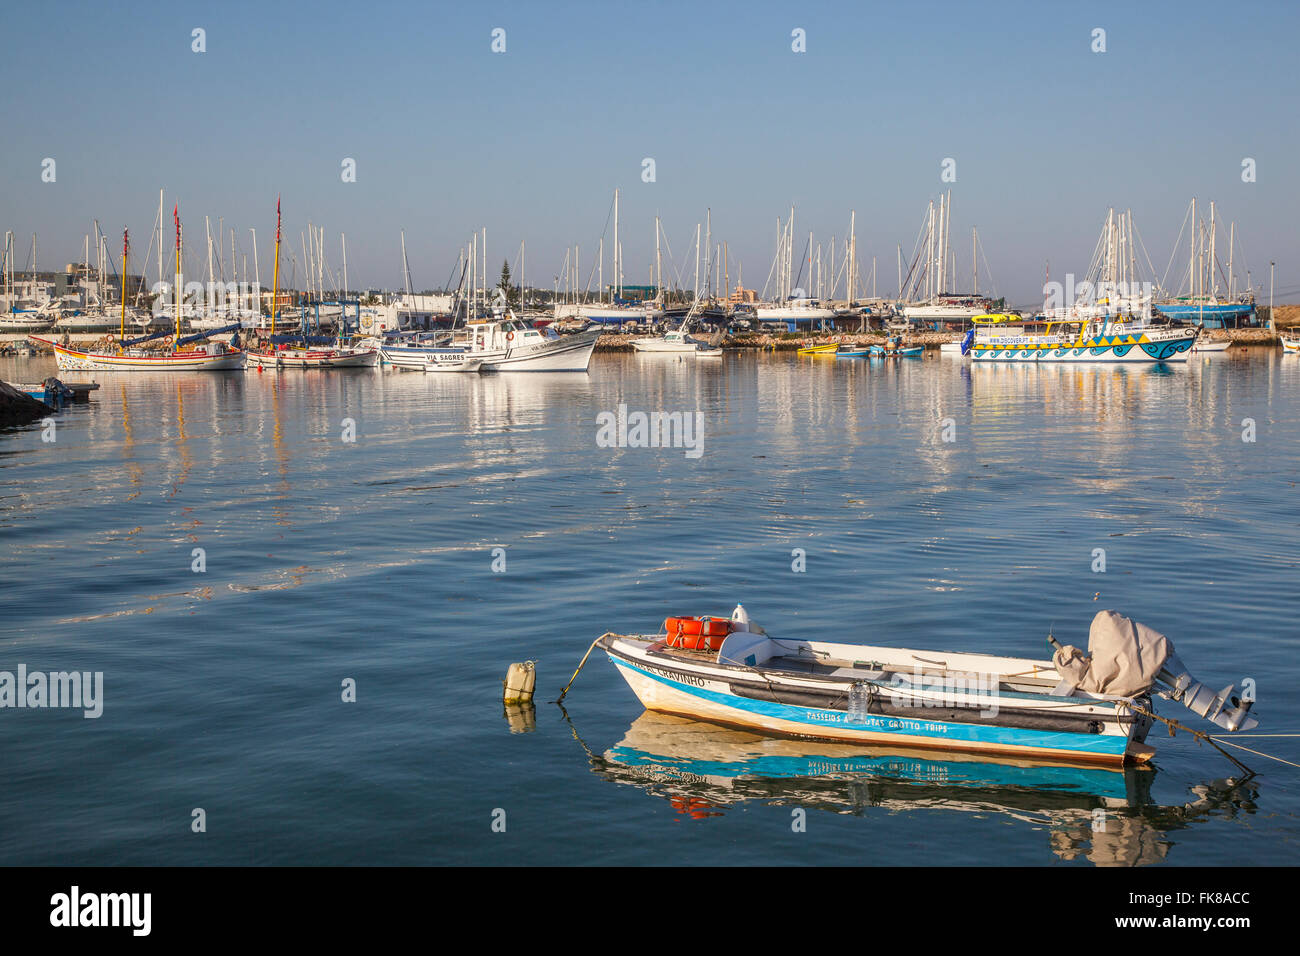 Portugal, Algarve, Lagos, Bensafrim River with view Marina de Lagos Stock Photo